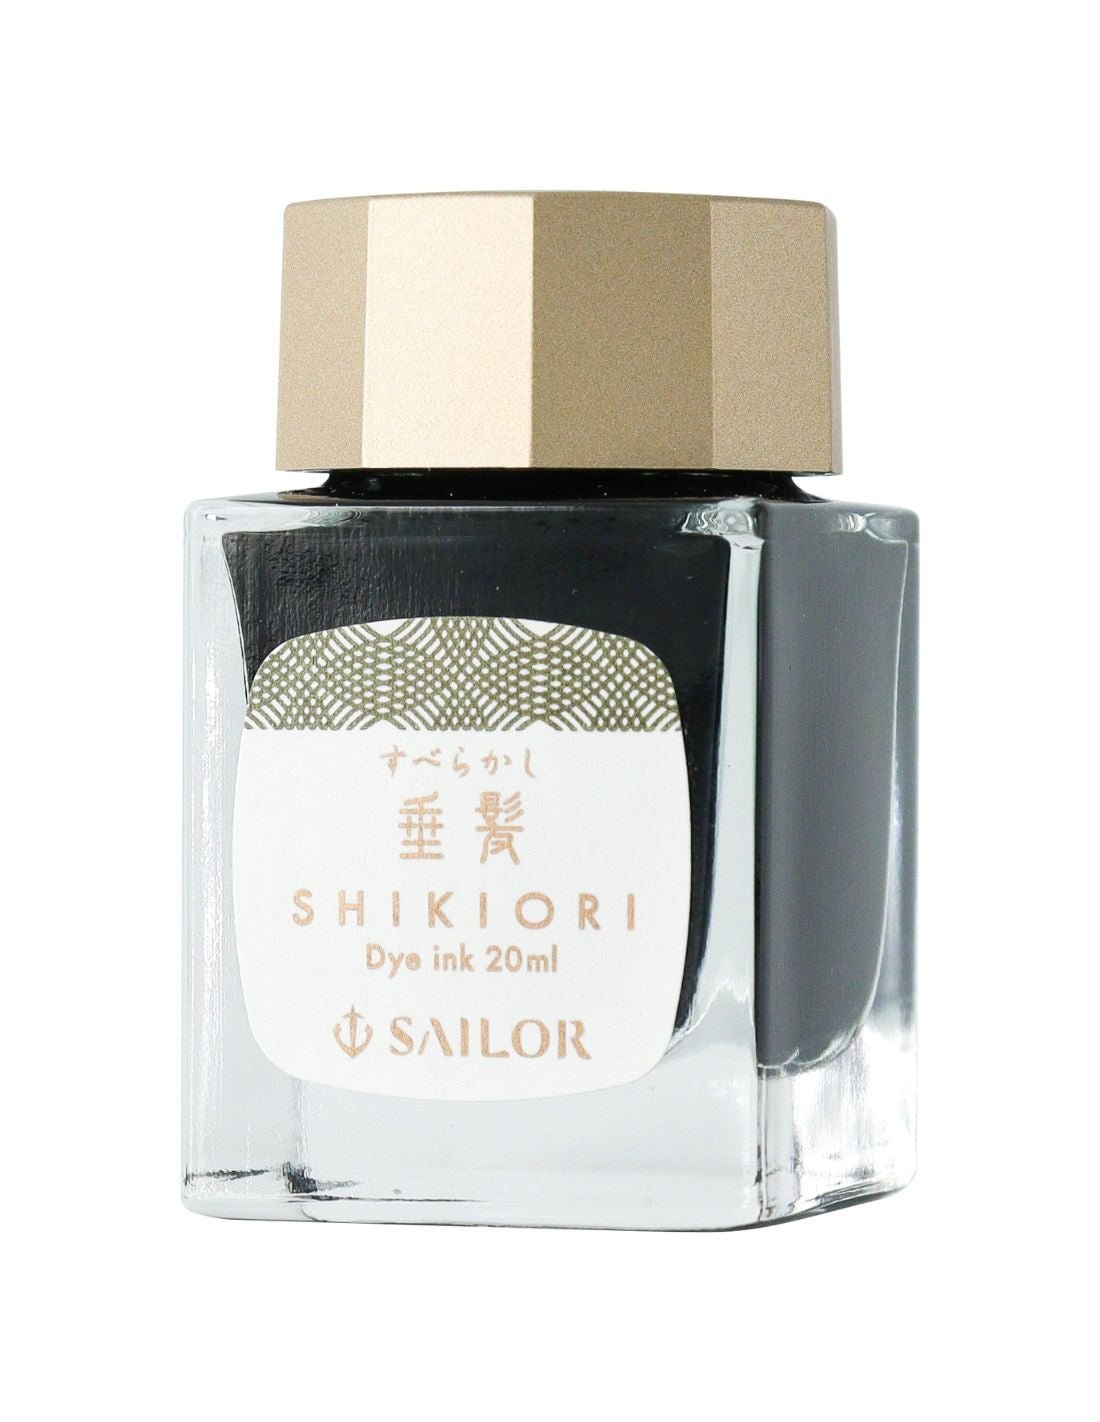 Flacon d'encre SAILOR Shikiori - 20 ml - Suberakashi - 4901680196884